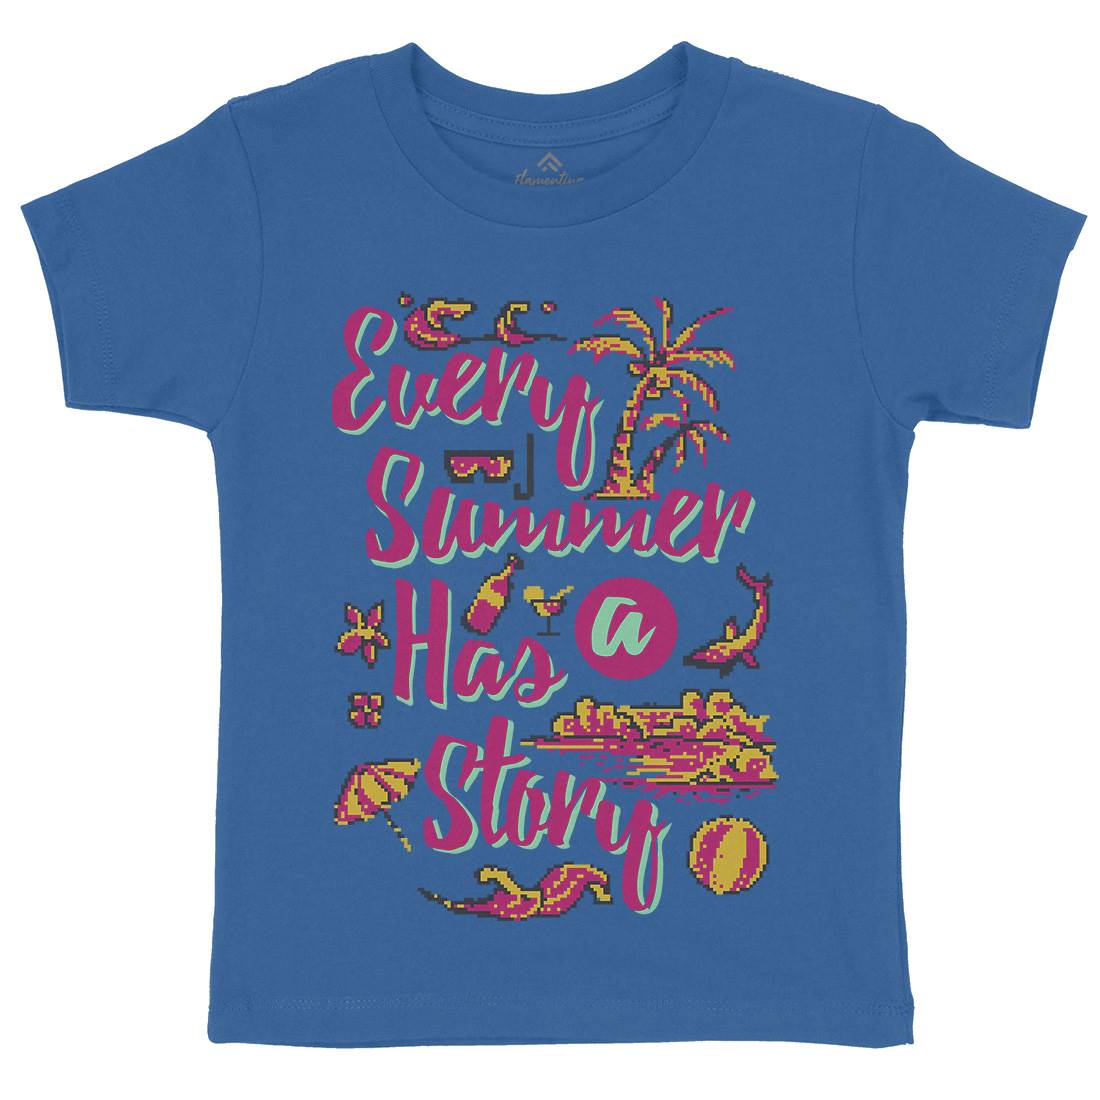 Every Summer Has A Story Kids Crew Neck T-Shirt Nature B896